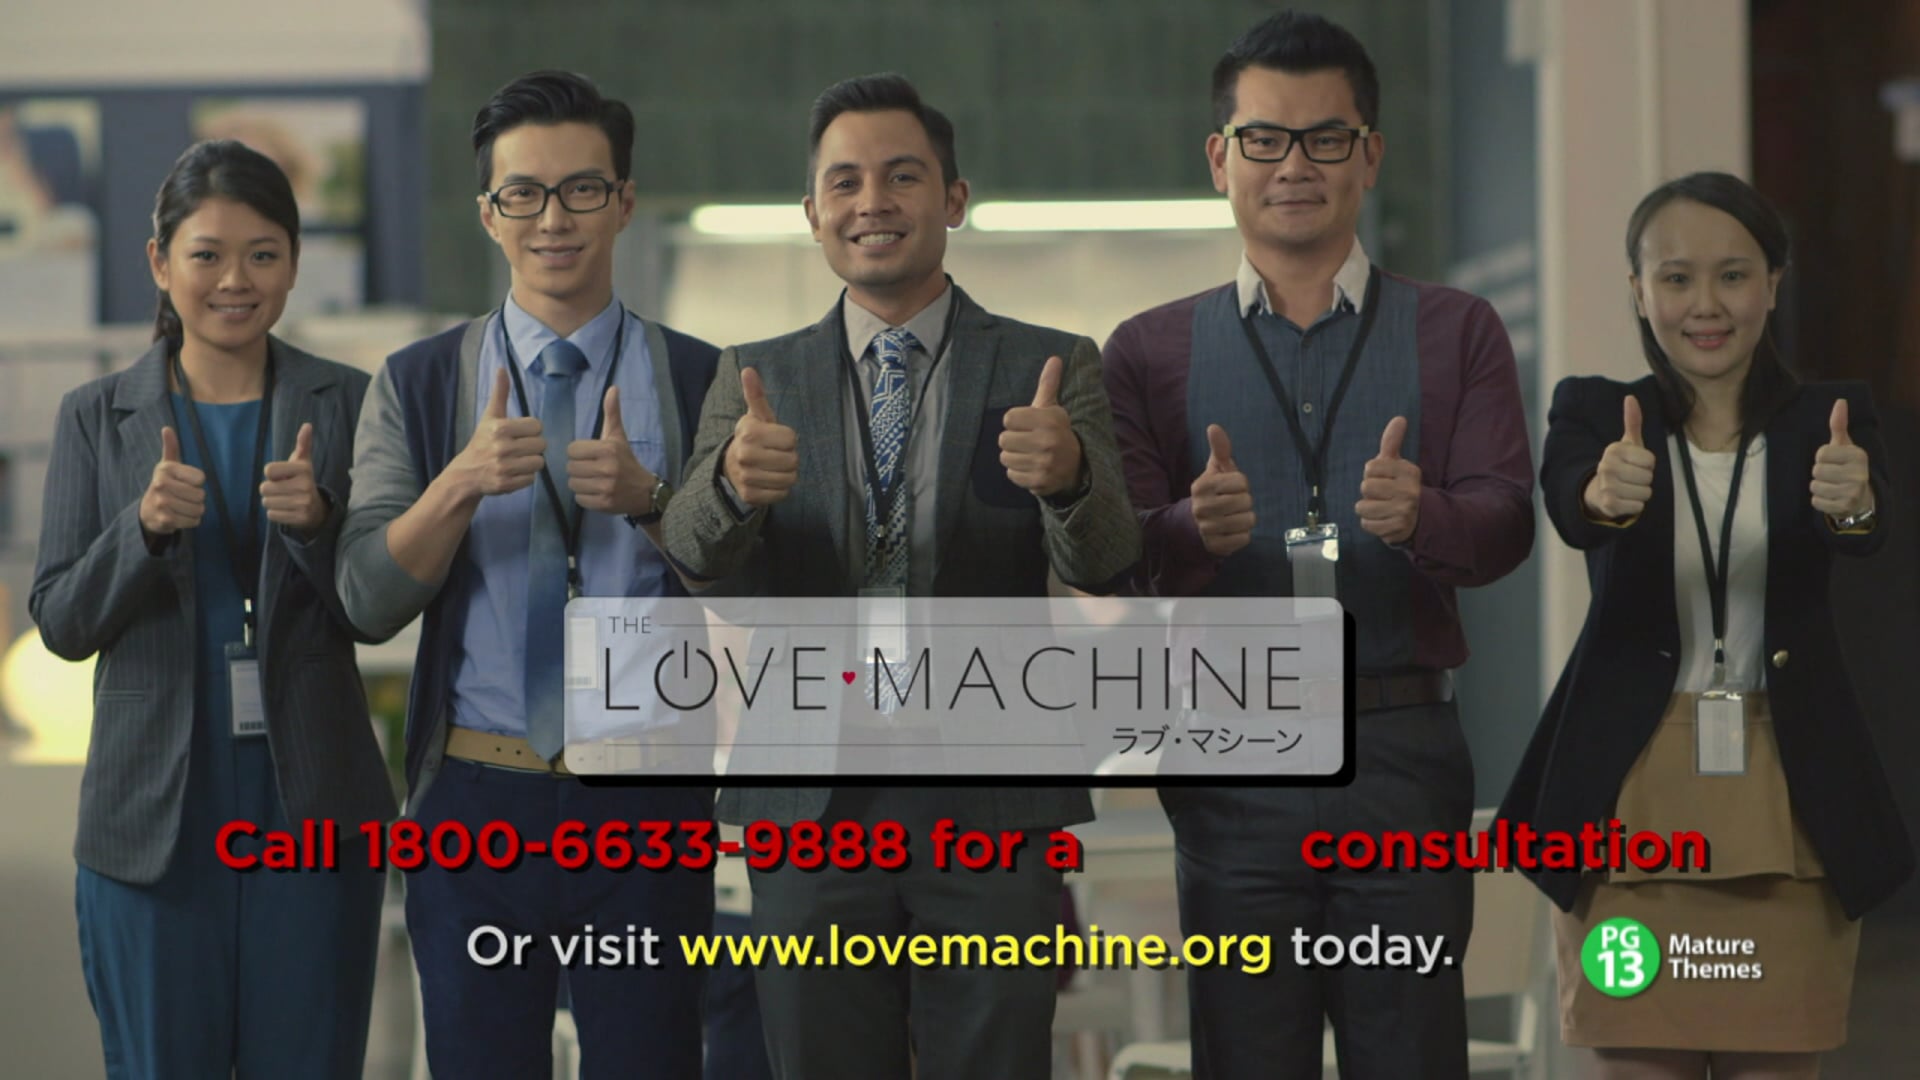 The Love Machine "Corporate Video"